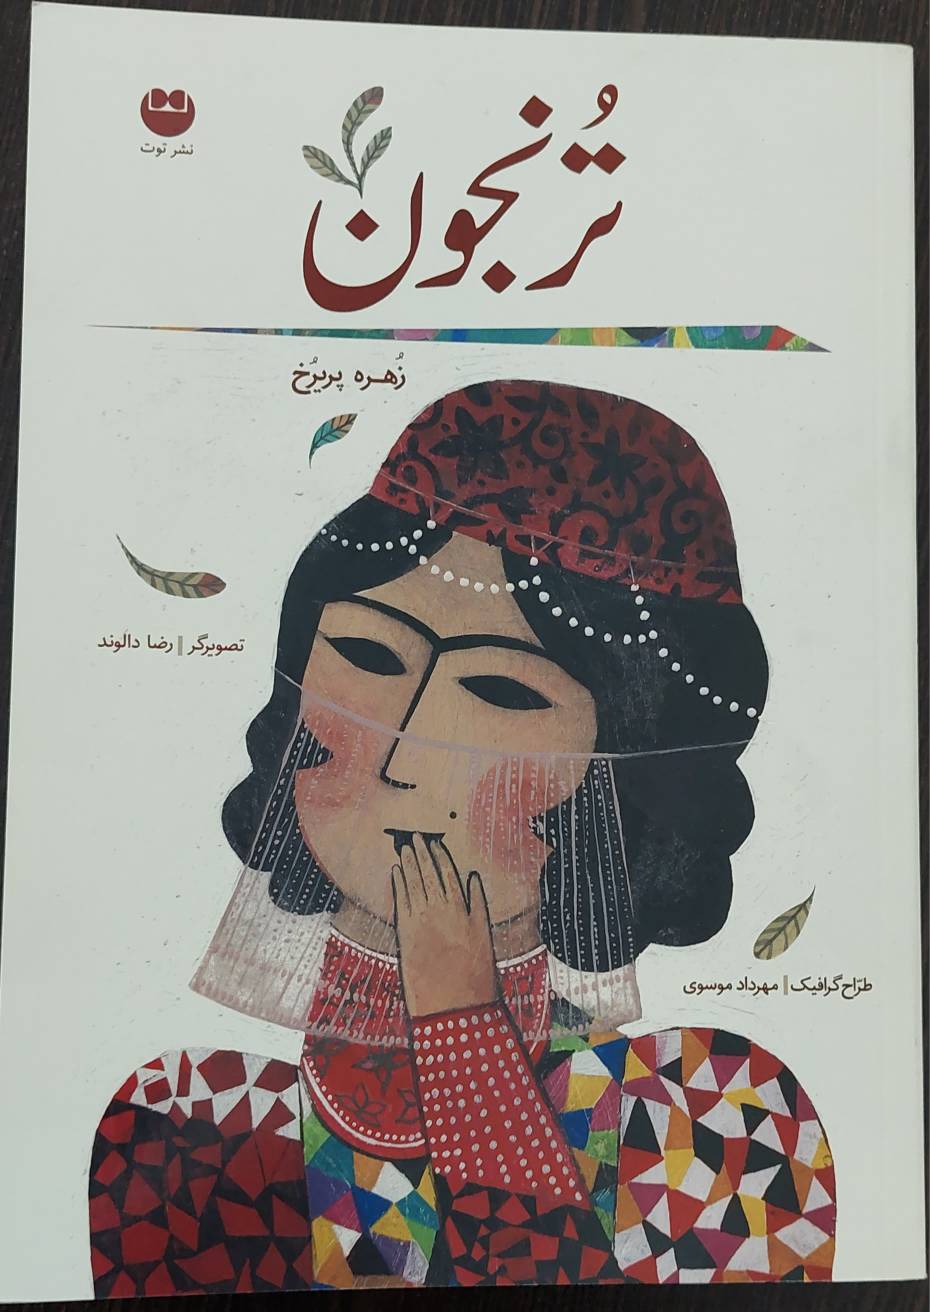 قصه گویی زهره پریرخ در کتابخانه لویژان